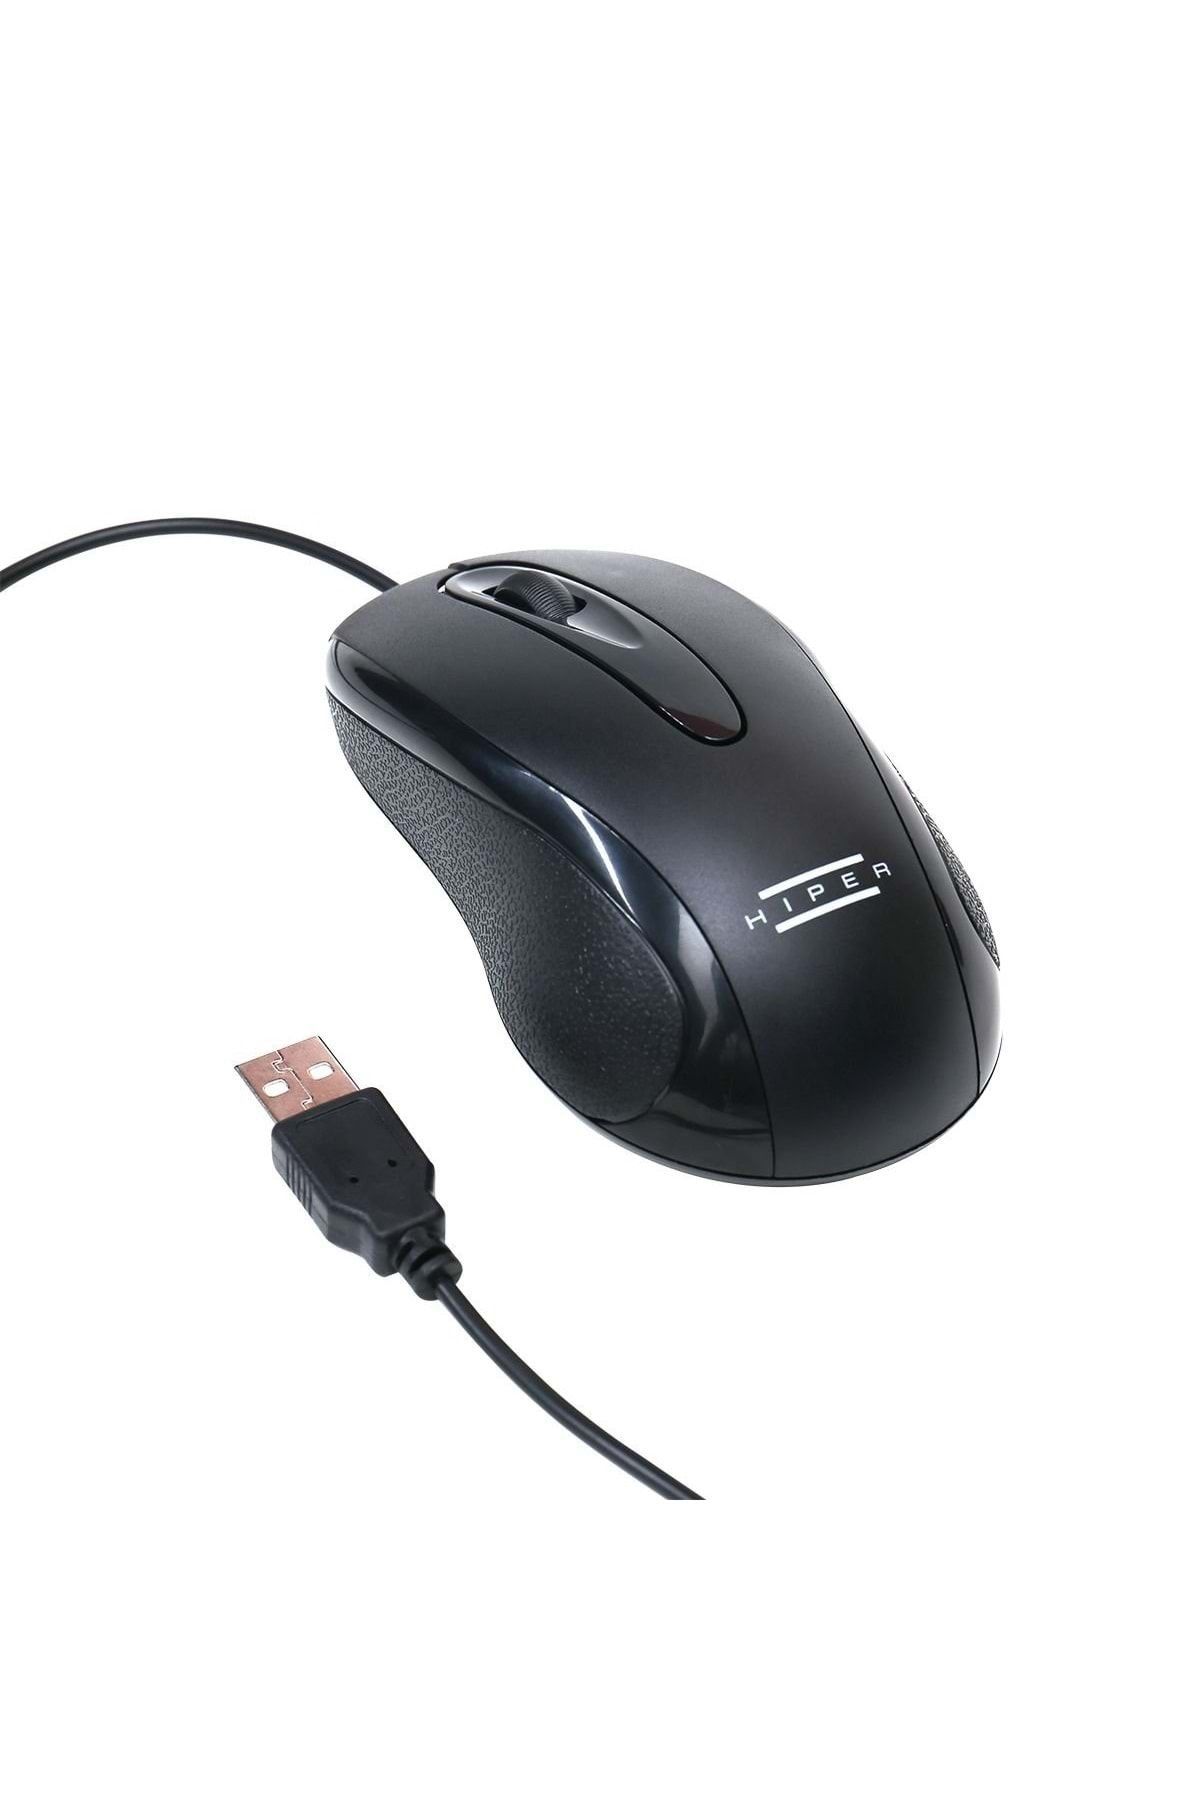 Hiper M-395 Optik Mouse USB Kablolu Siyah 